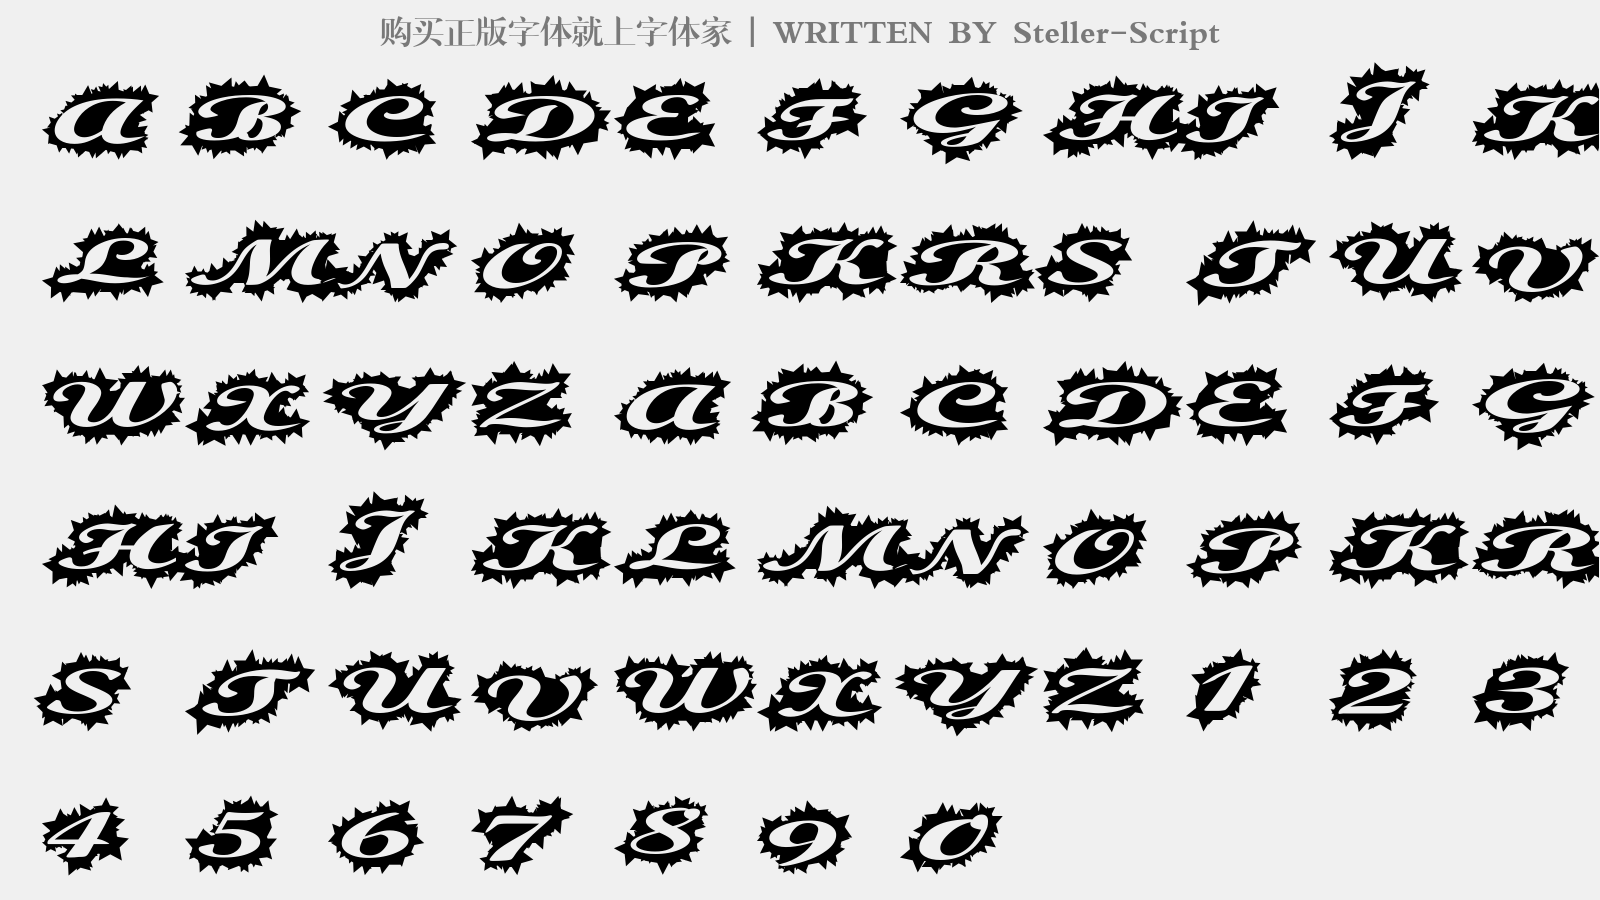 Steller-Script - 大写字母/小写字母/数字